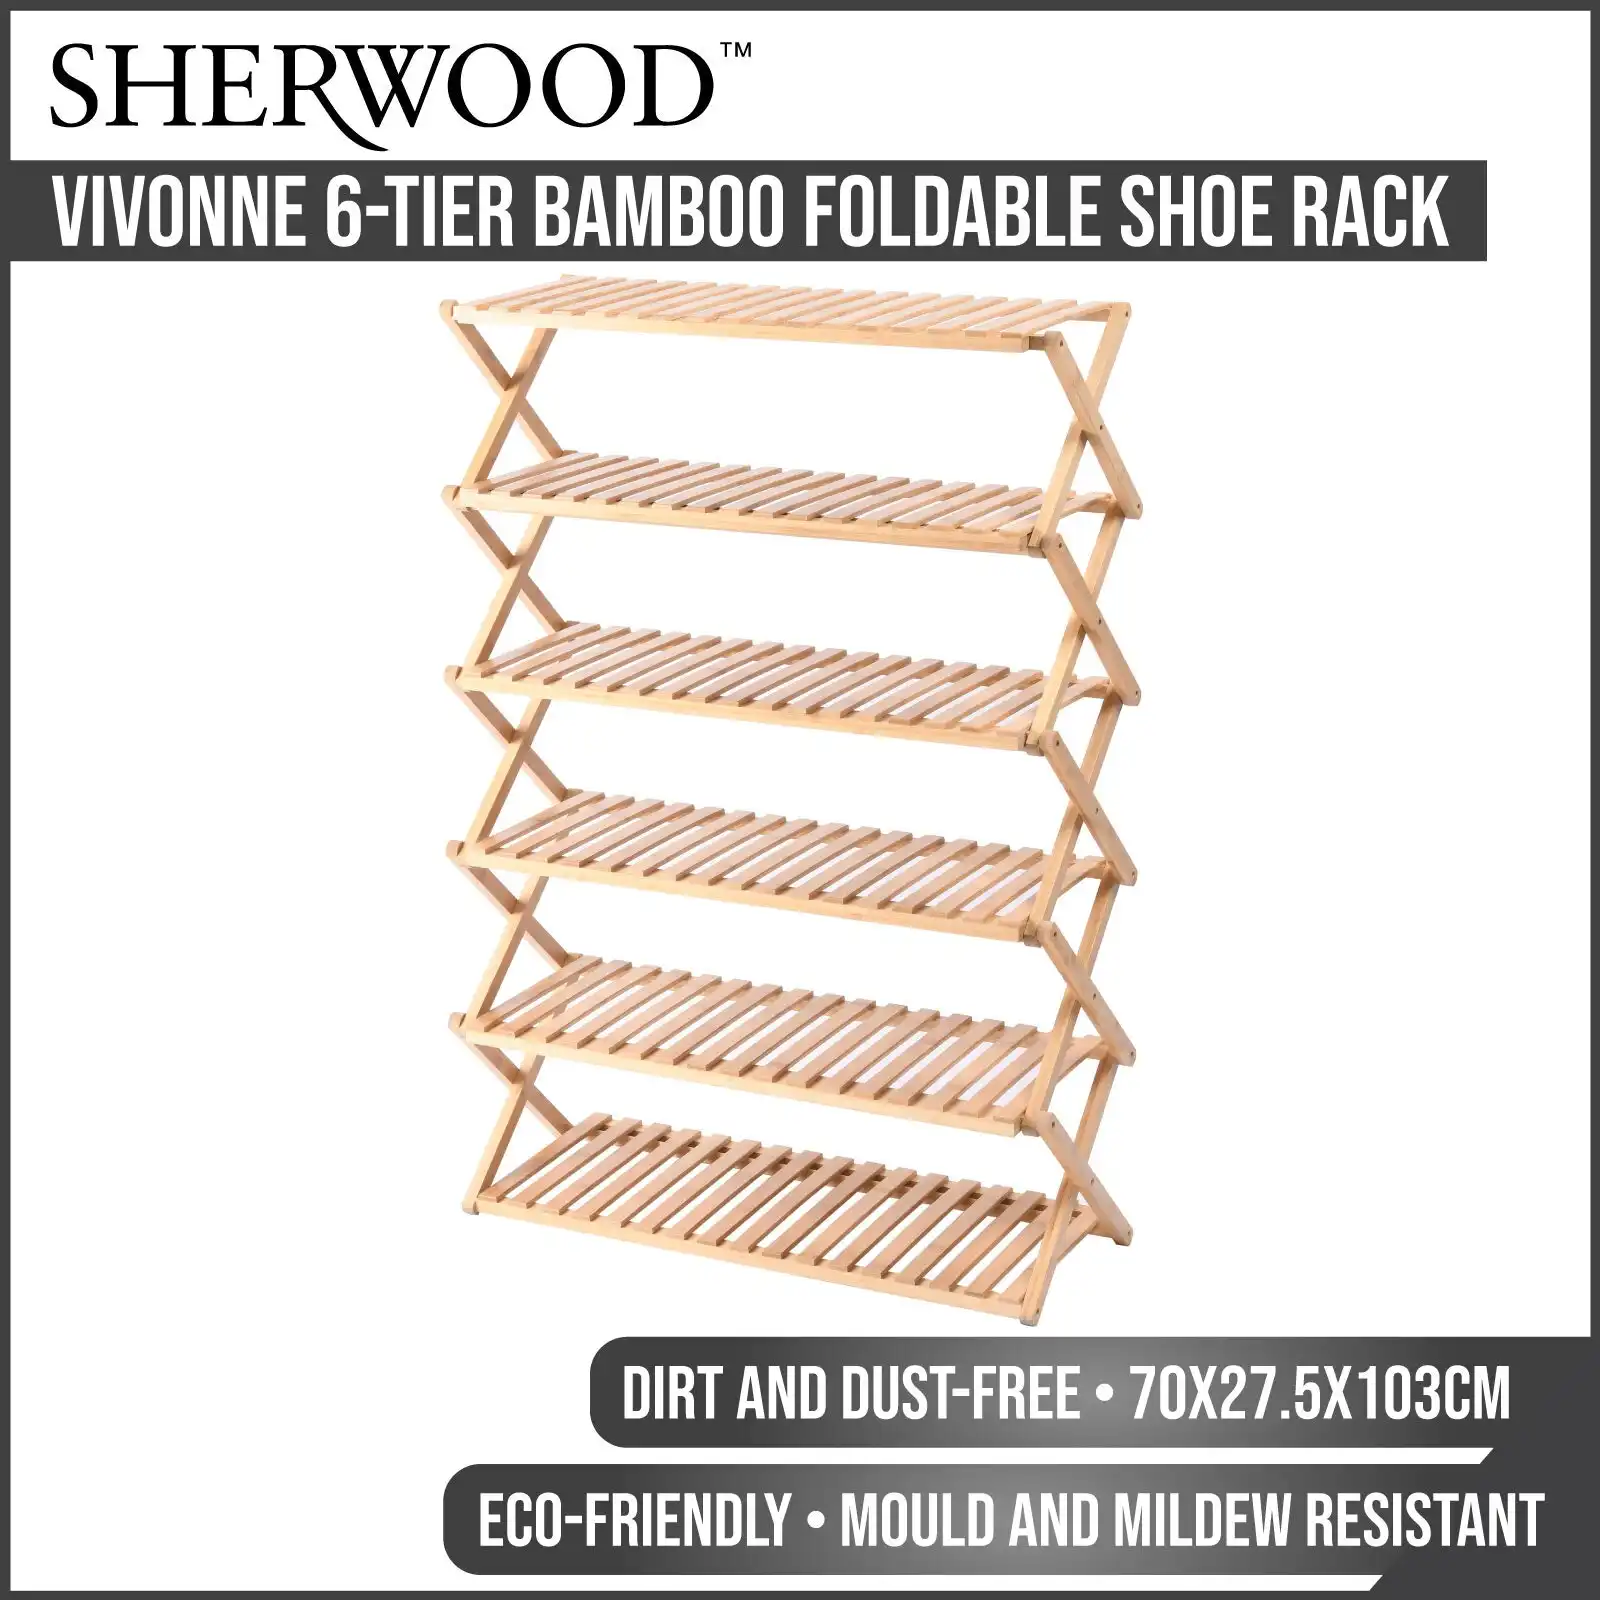 Sherwood Vivonne 6-Tier Bamboo Shoe Rack Natural Colour and Sturdy Construction Foldable Storage 103x70x27.5cm